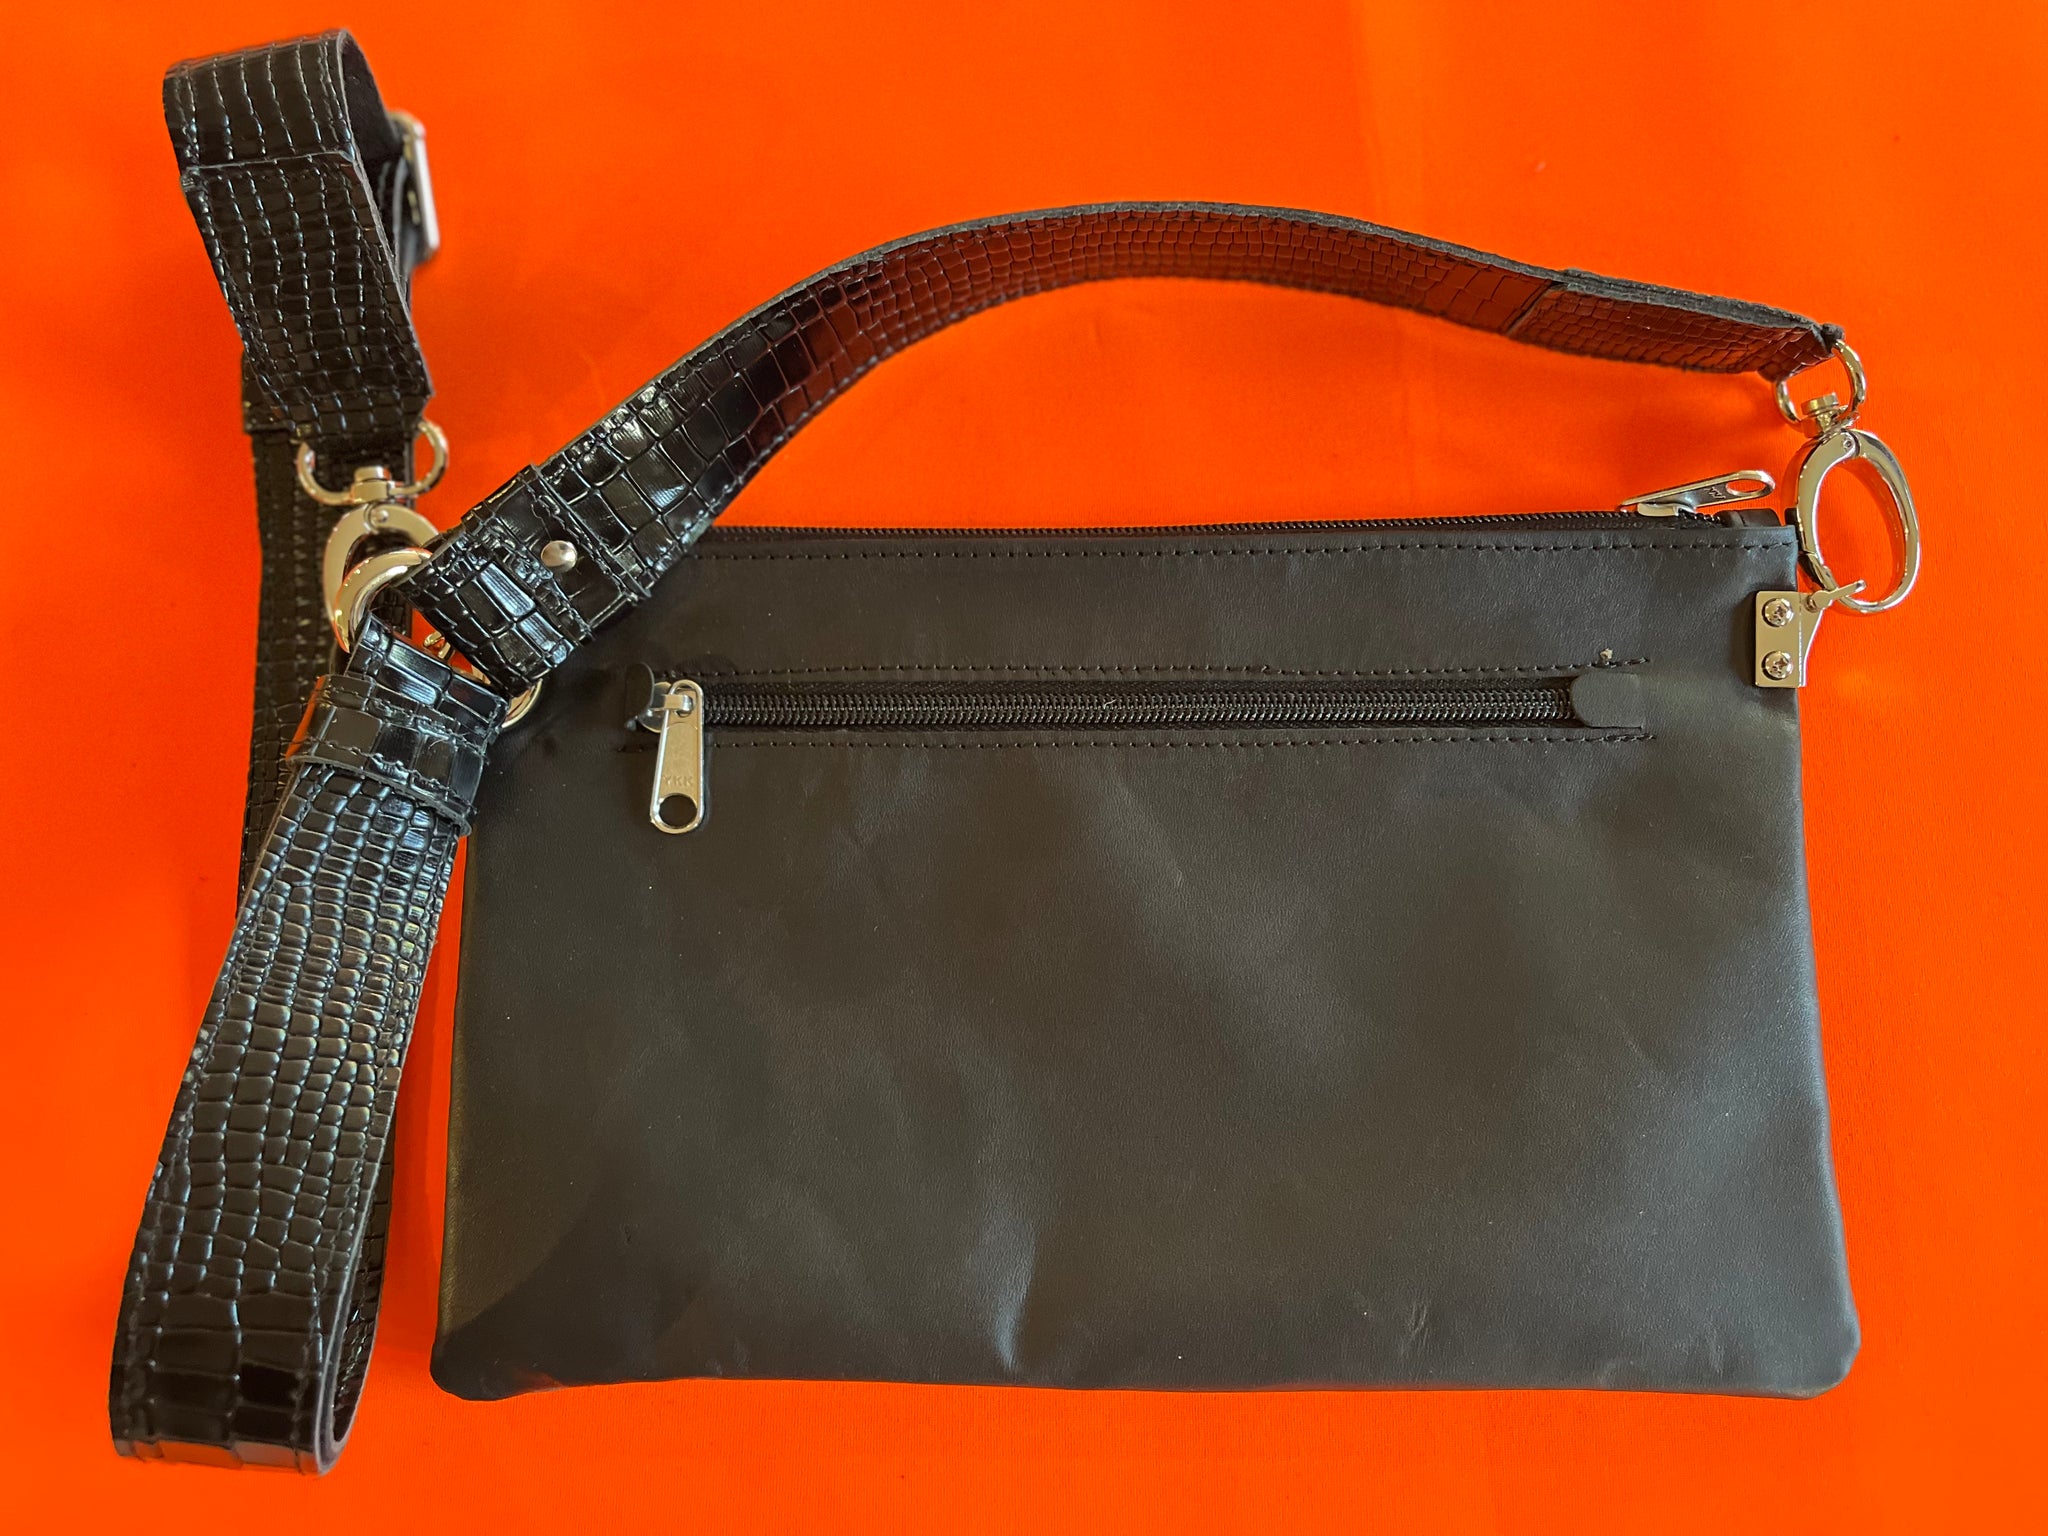 Zara crossbody bag featuring pressed barramundi